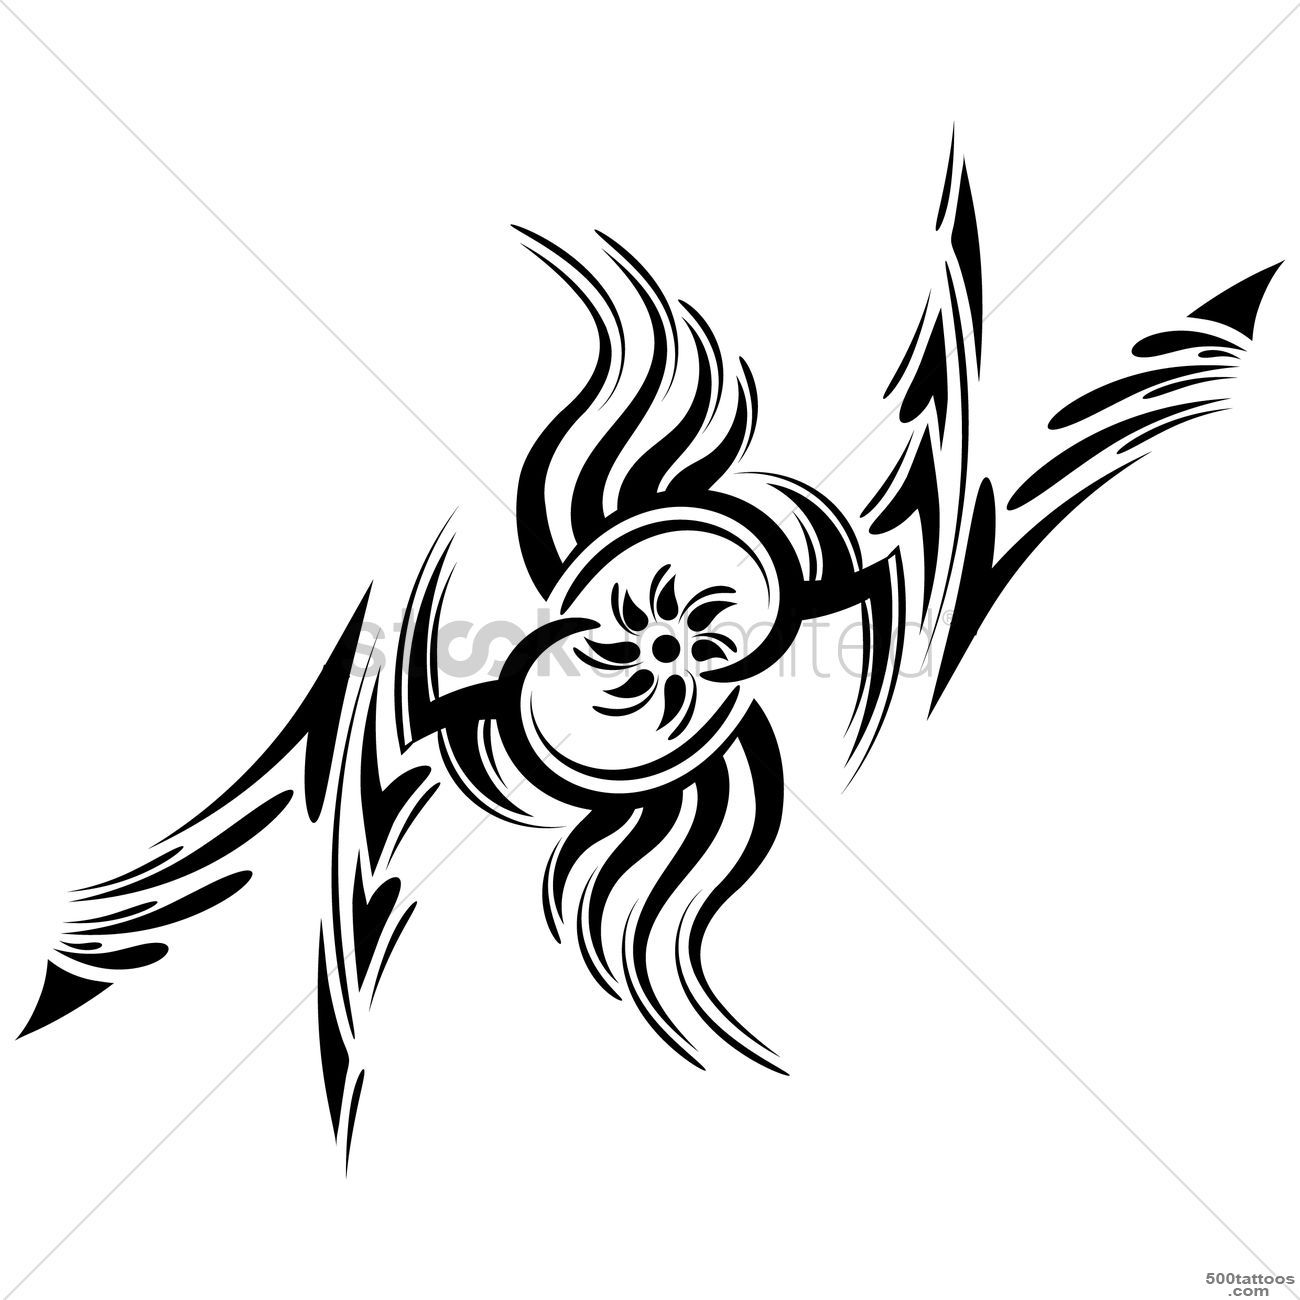 Decorative tattoo design Vector Image   1443702  StockUnlimited_45